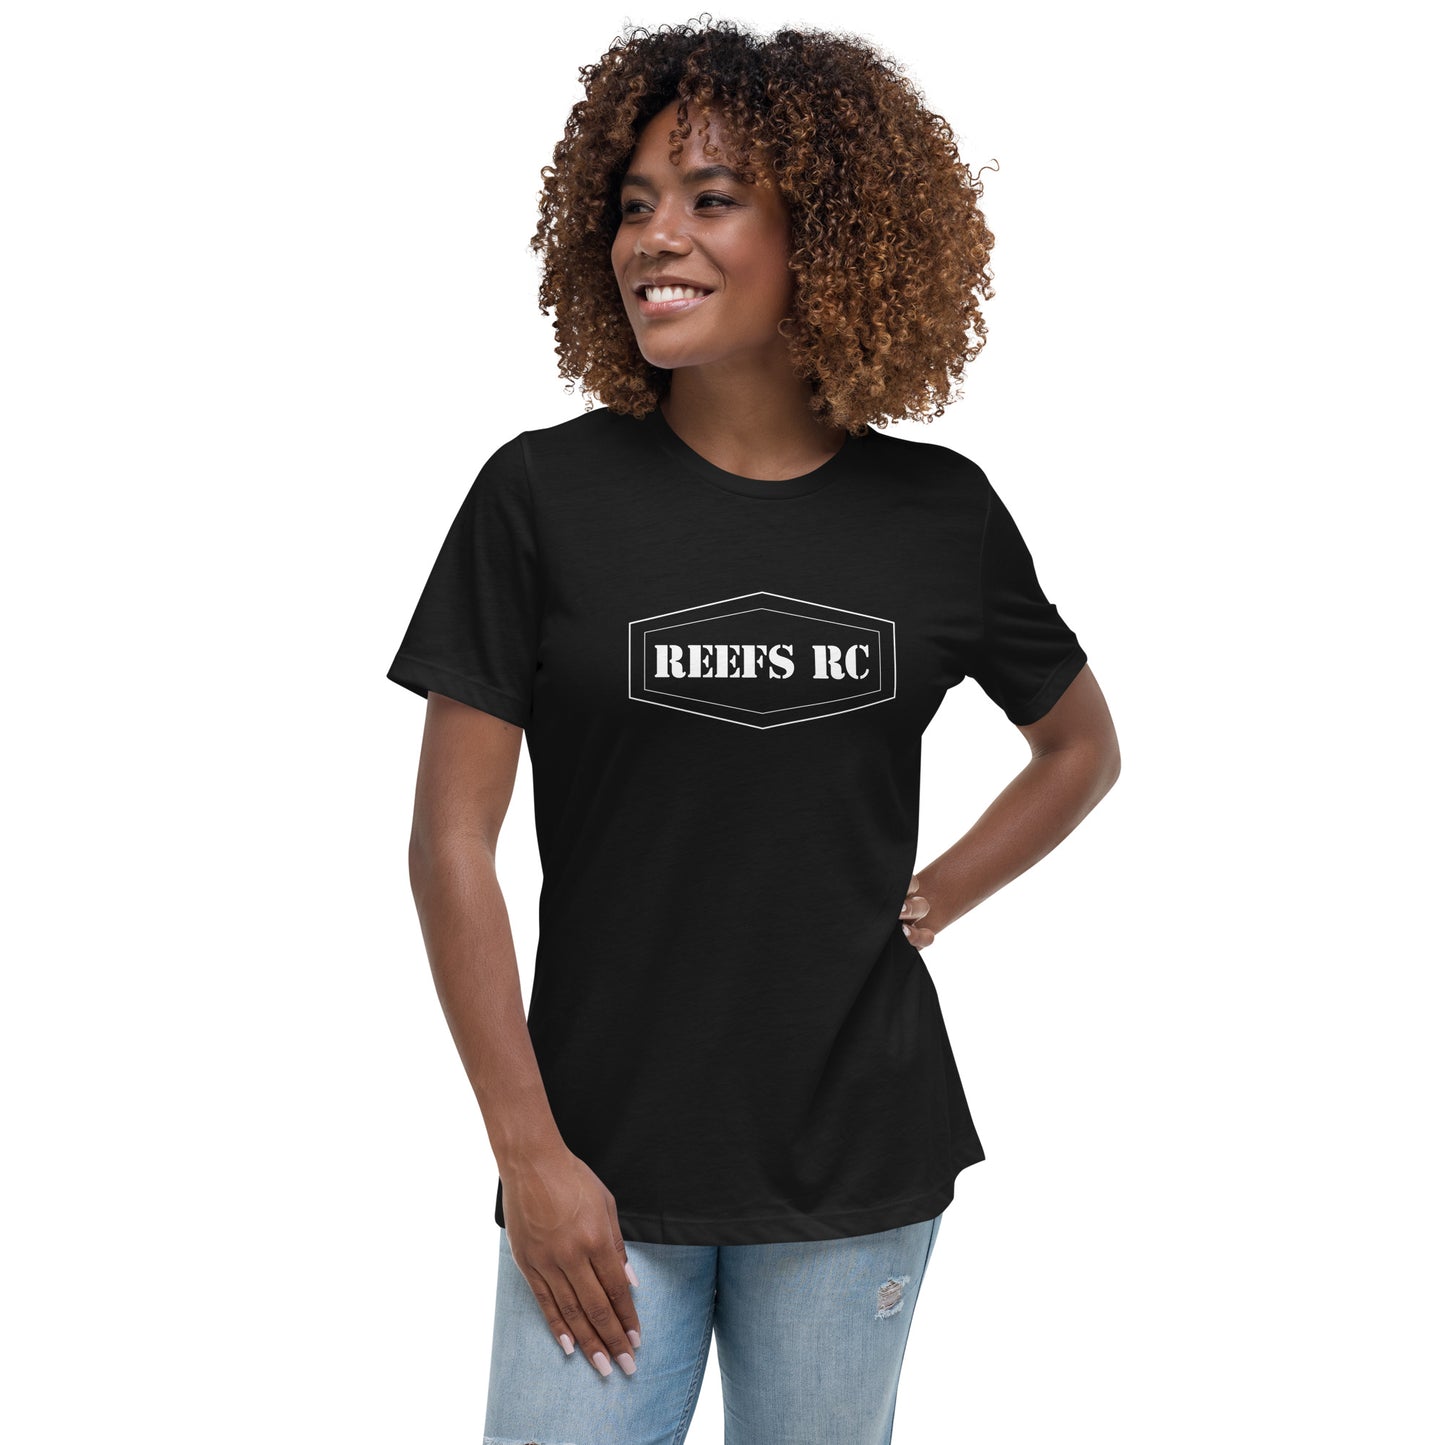 Reefs RC Classic Women's Relaxed T-Shirt (Bella+Canvas)